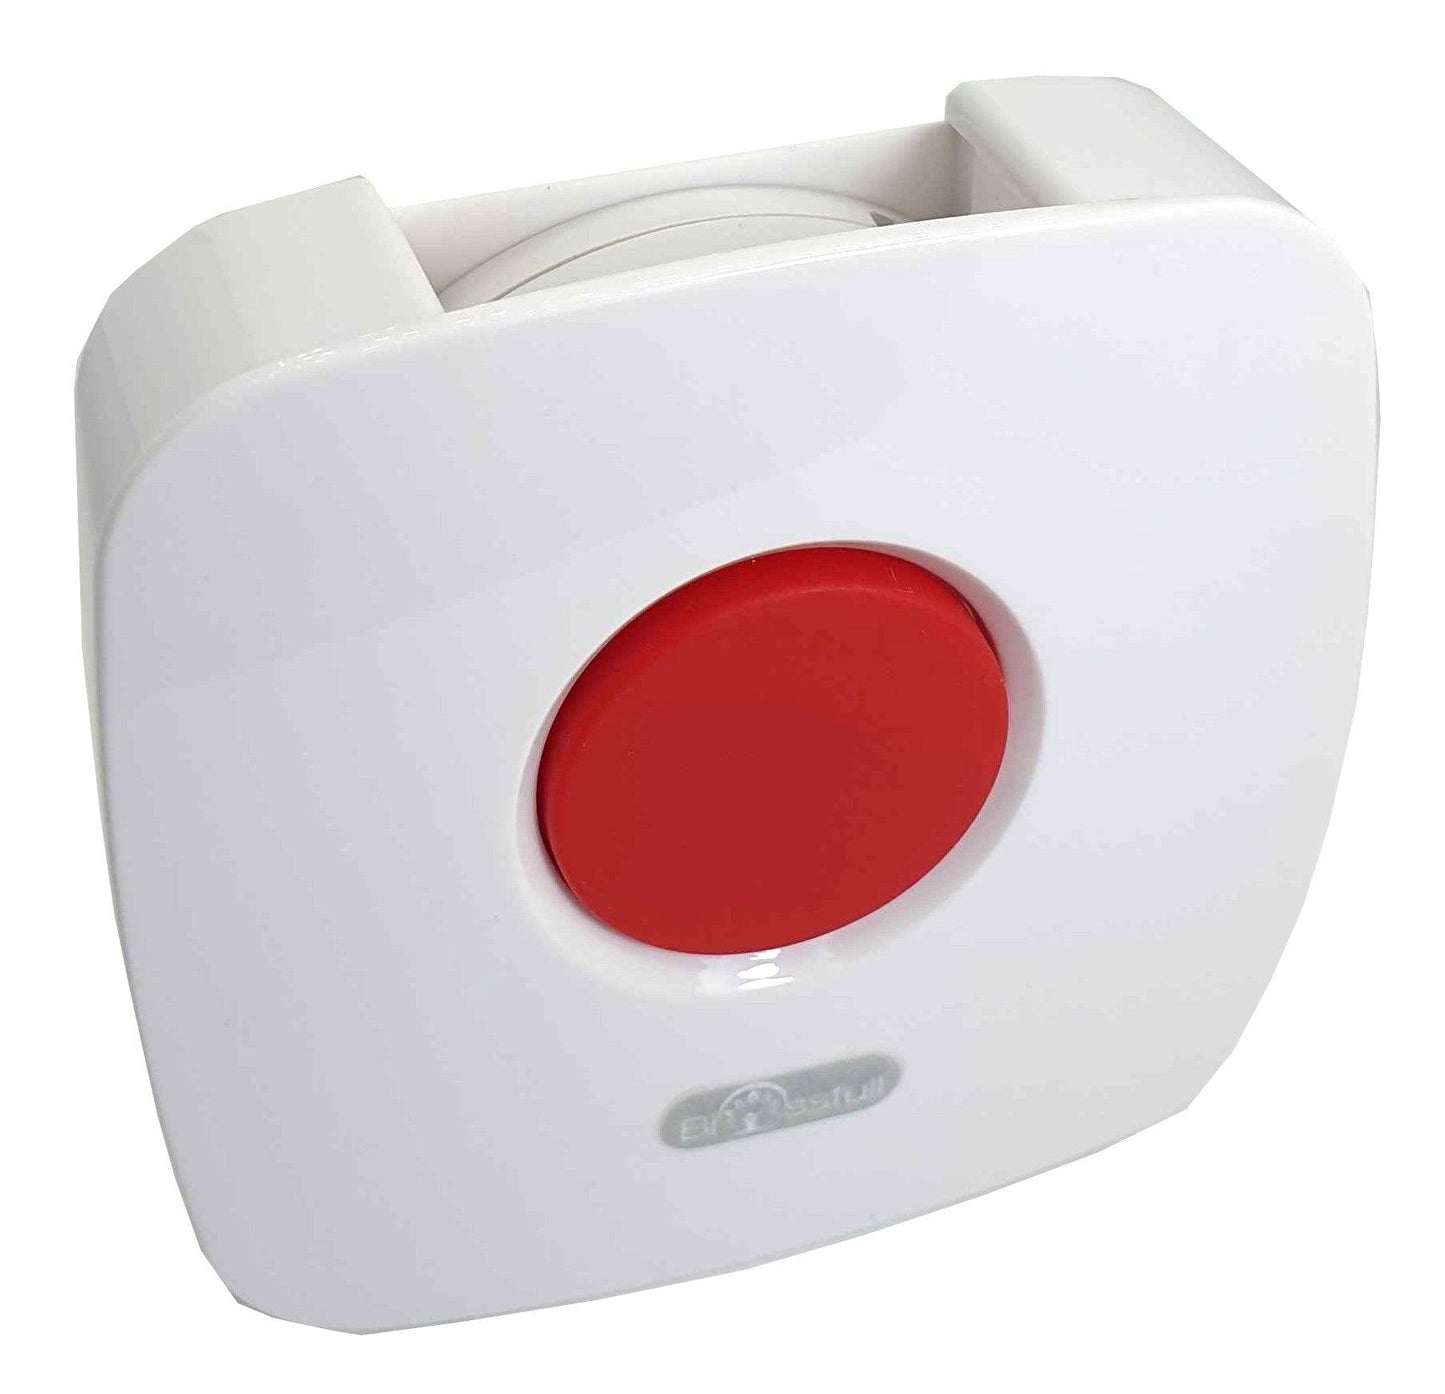 Wall-mounted Alert Button - Blissfull Life SG